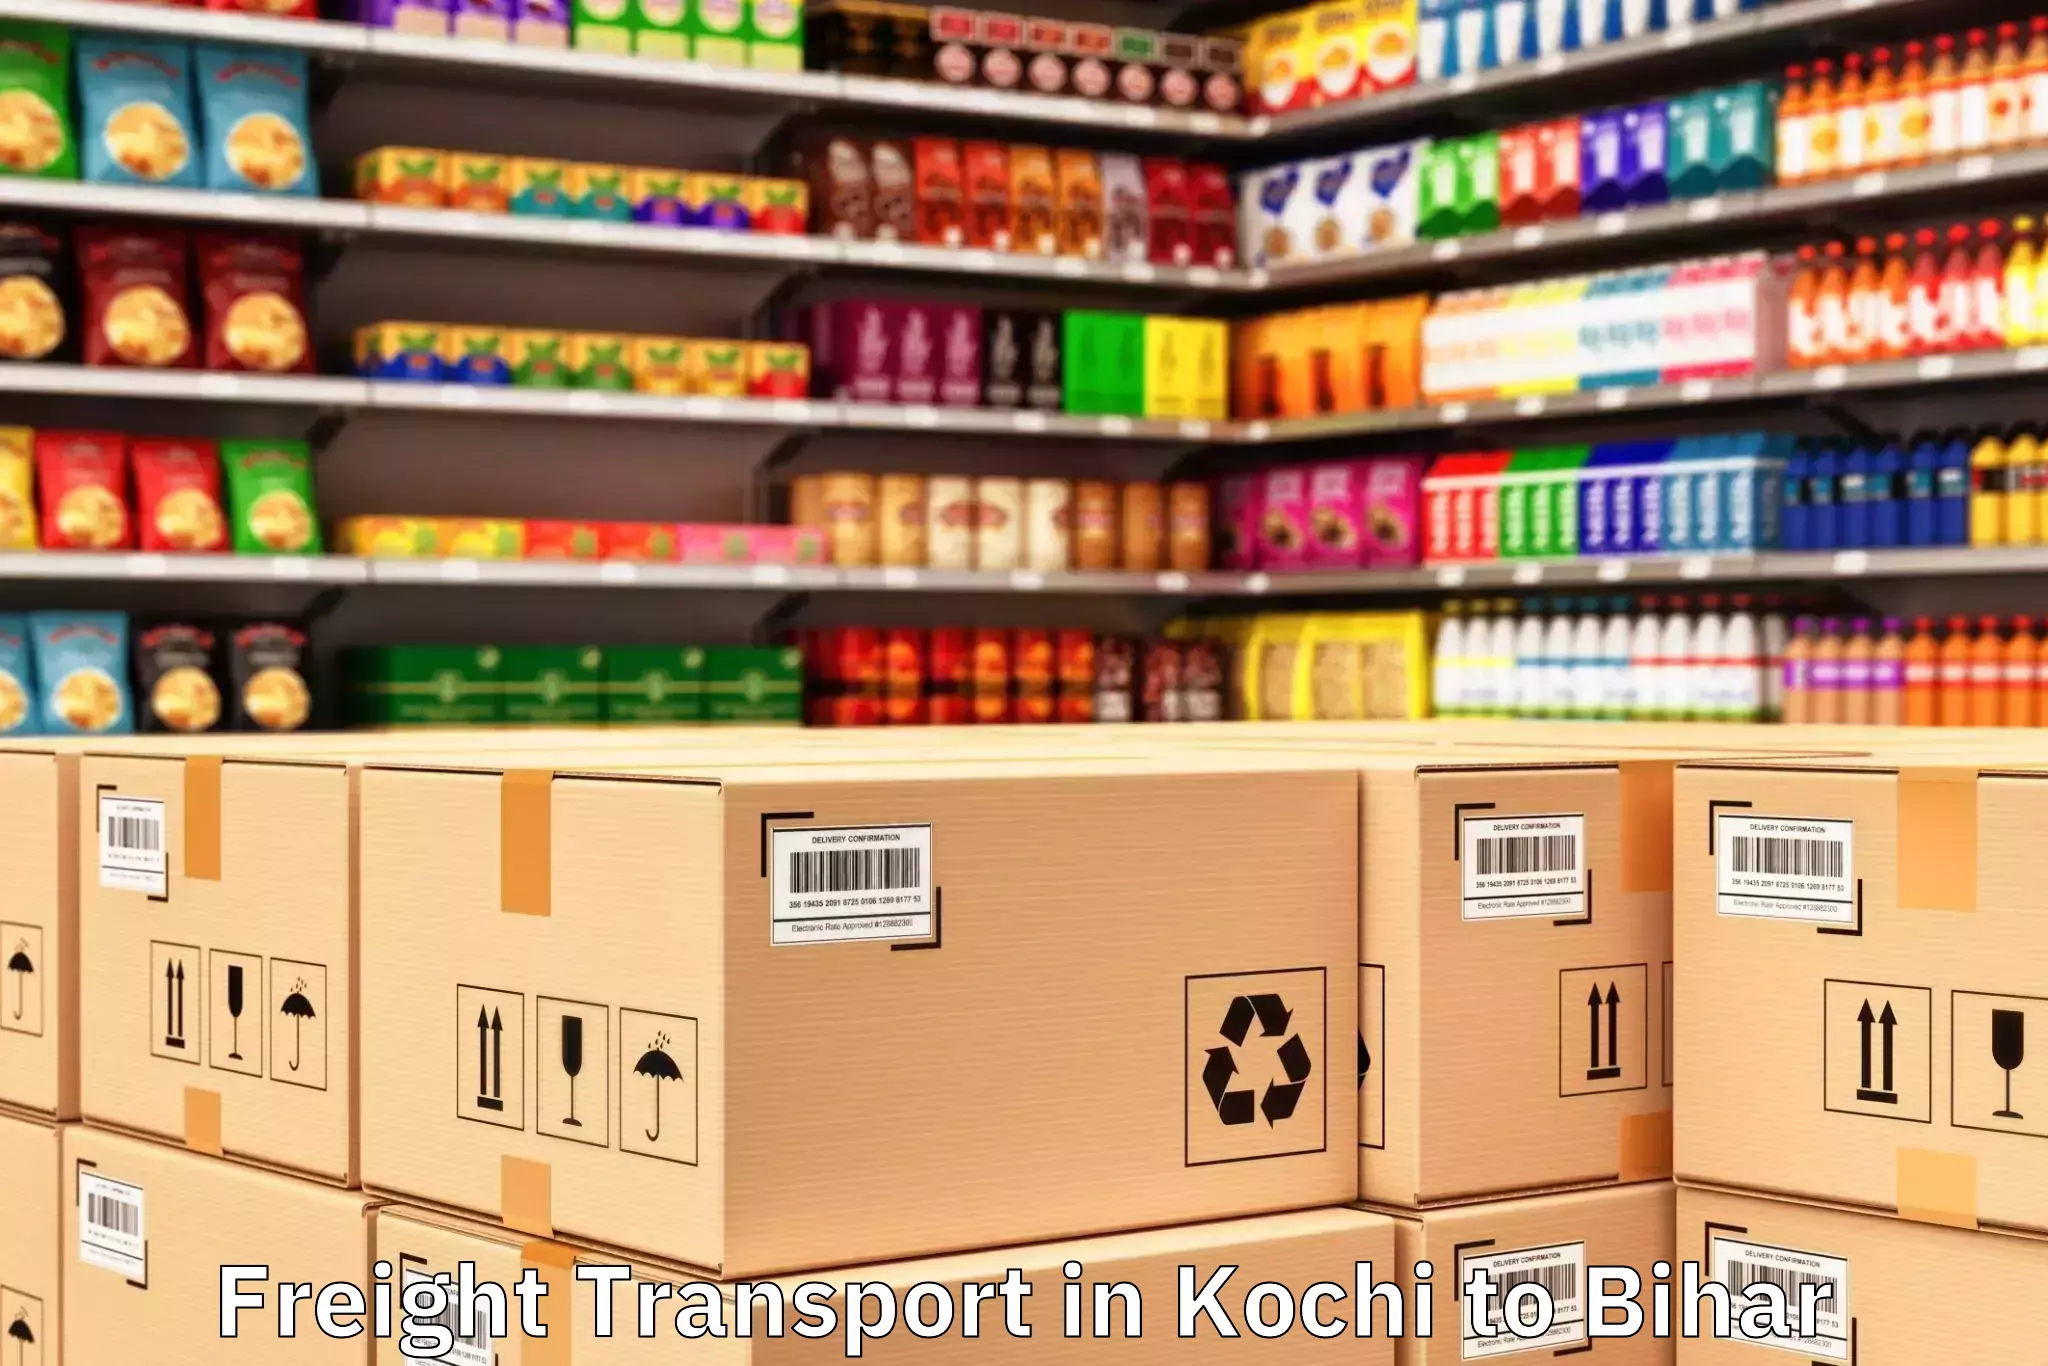 Kochi to Bihar Freight Transport